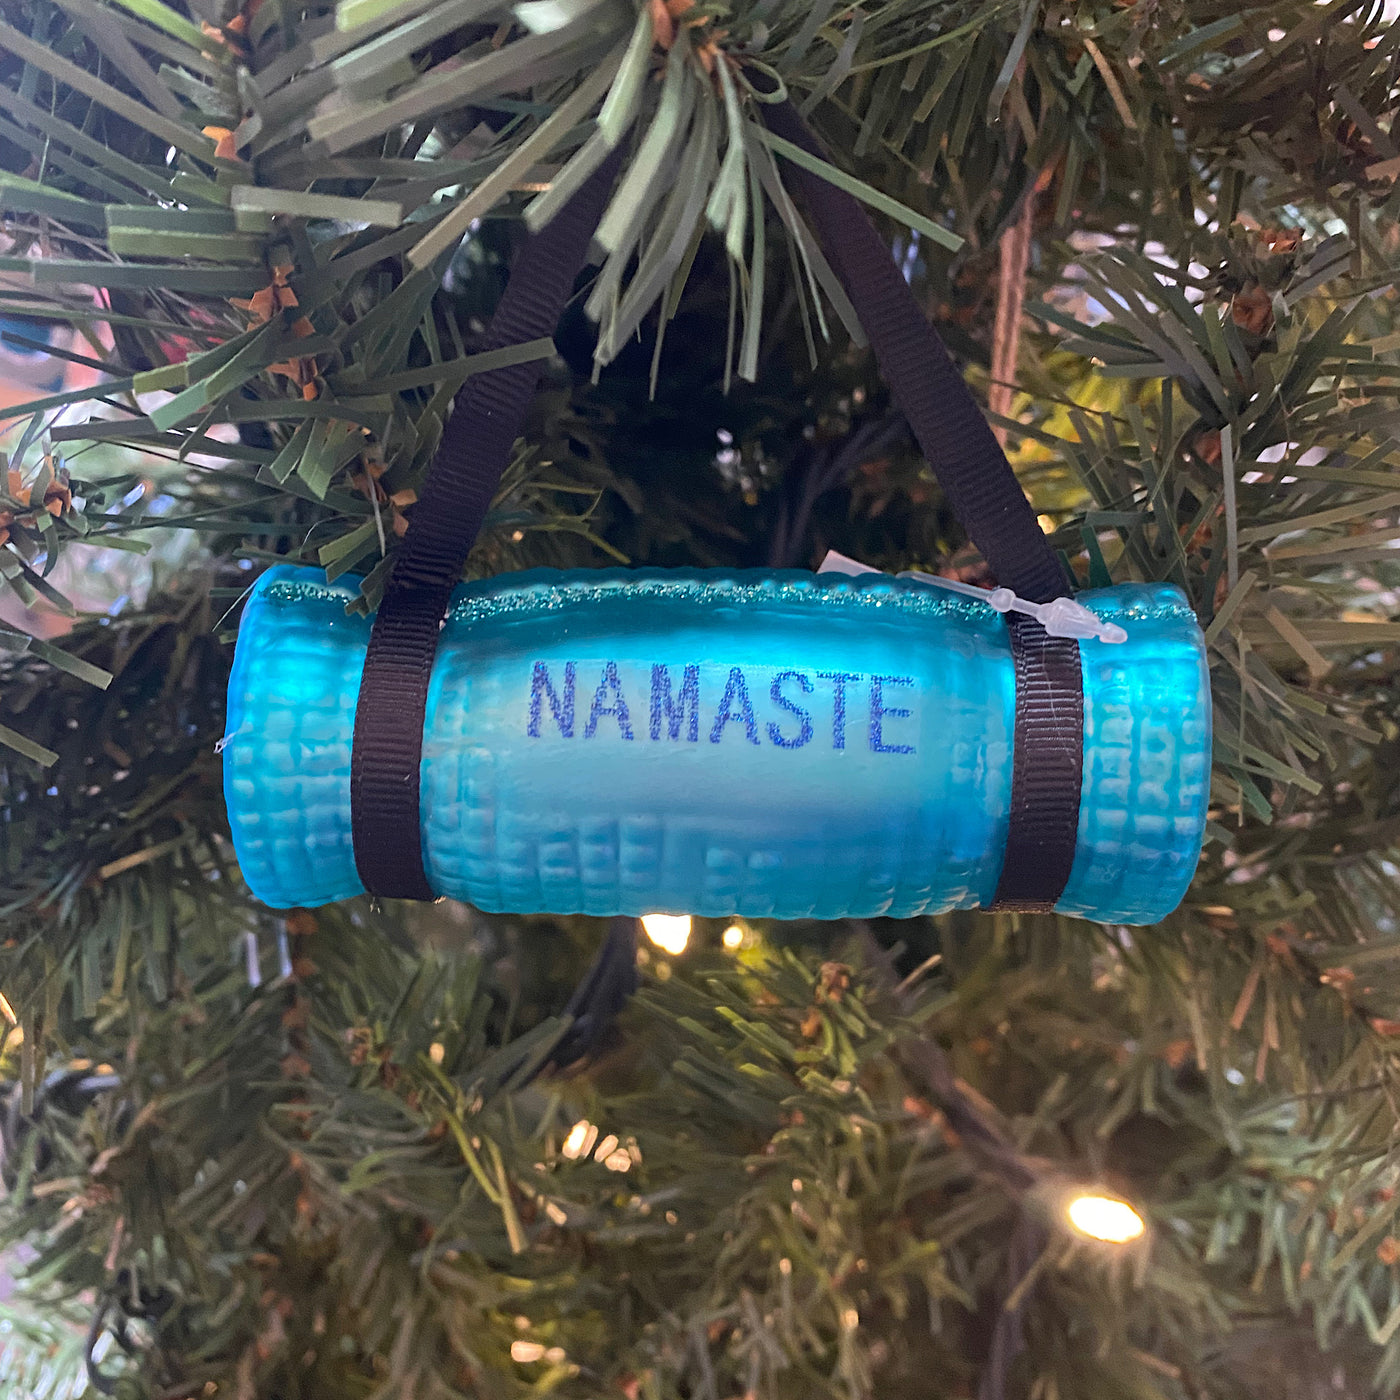 Namaste Ornament